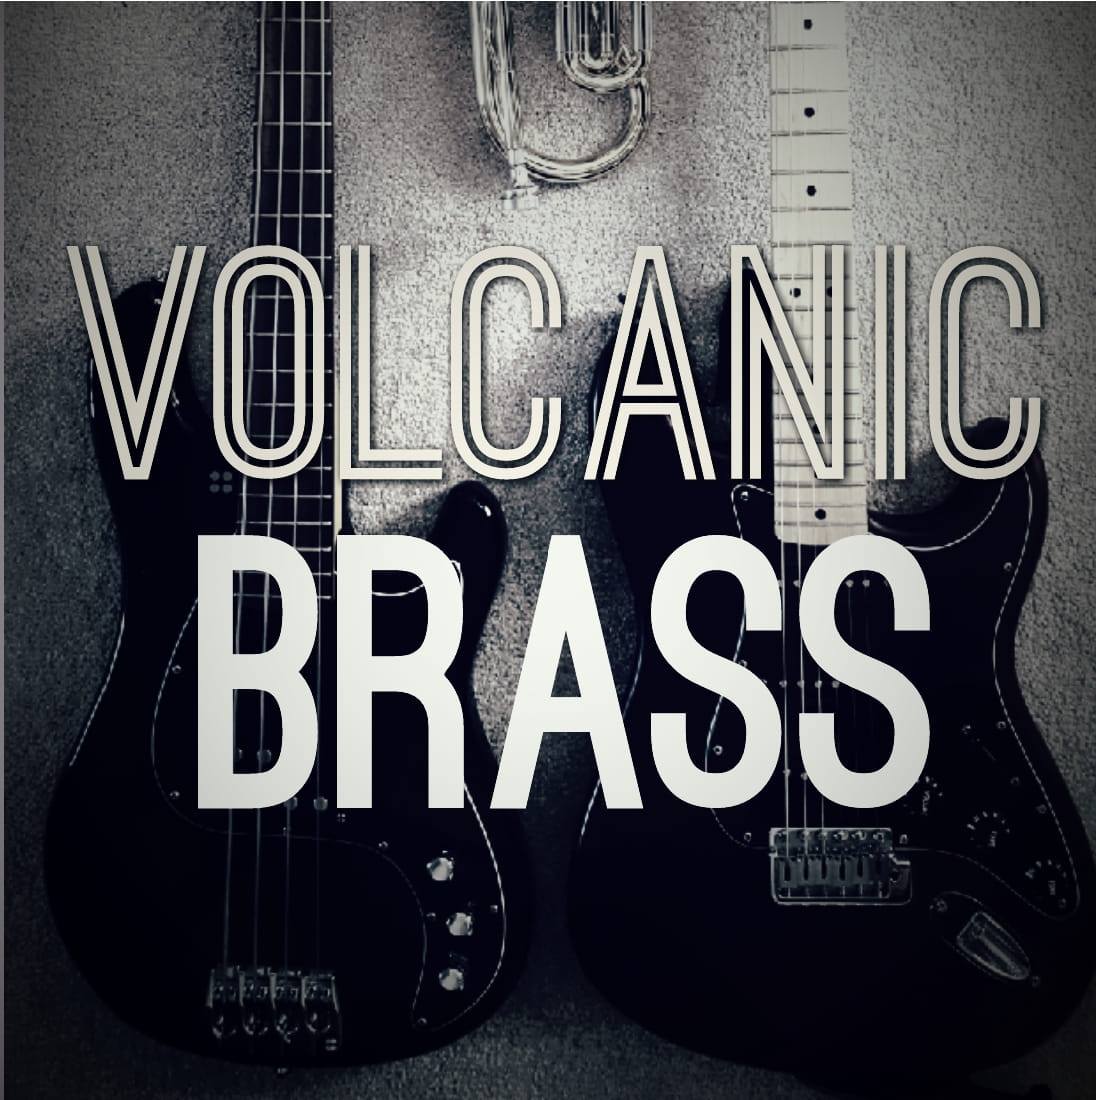 Volcanic Brass